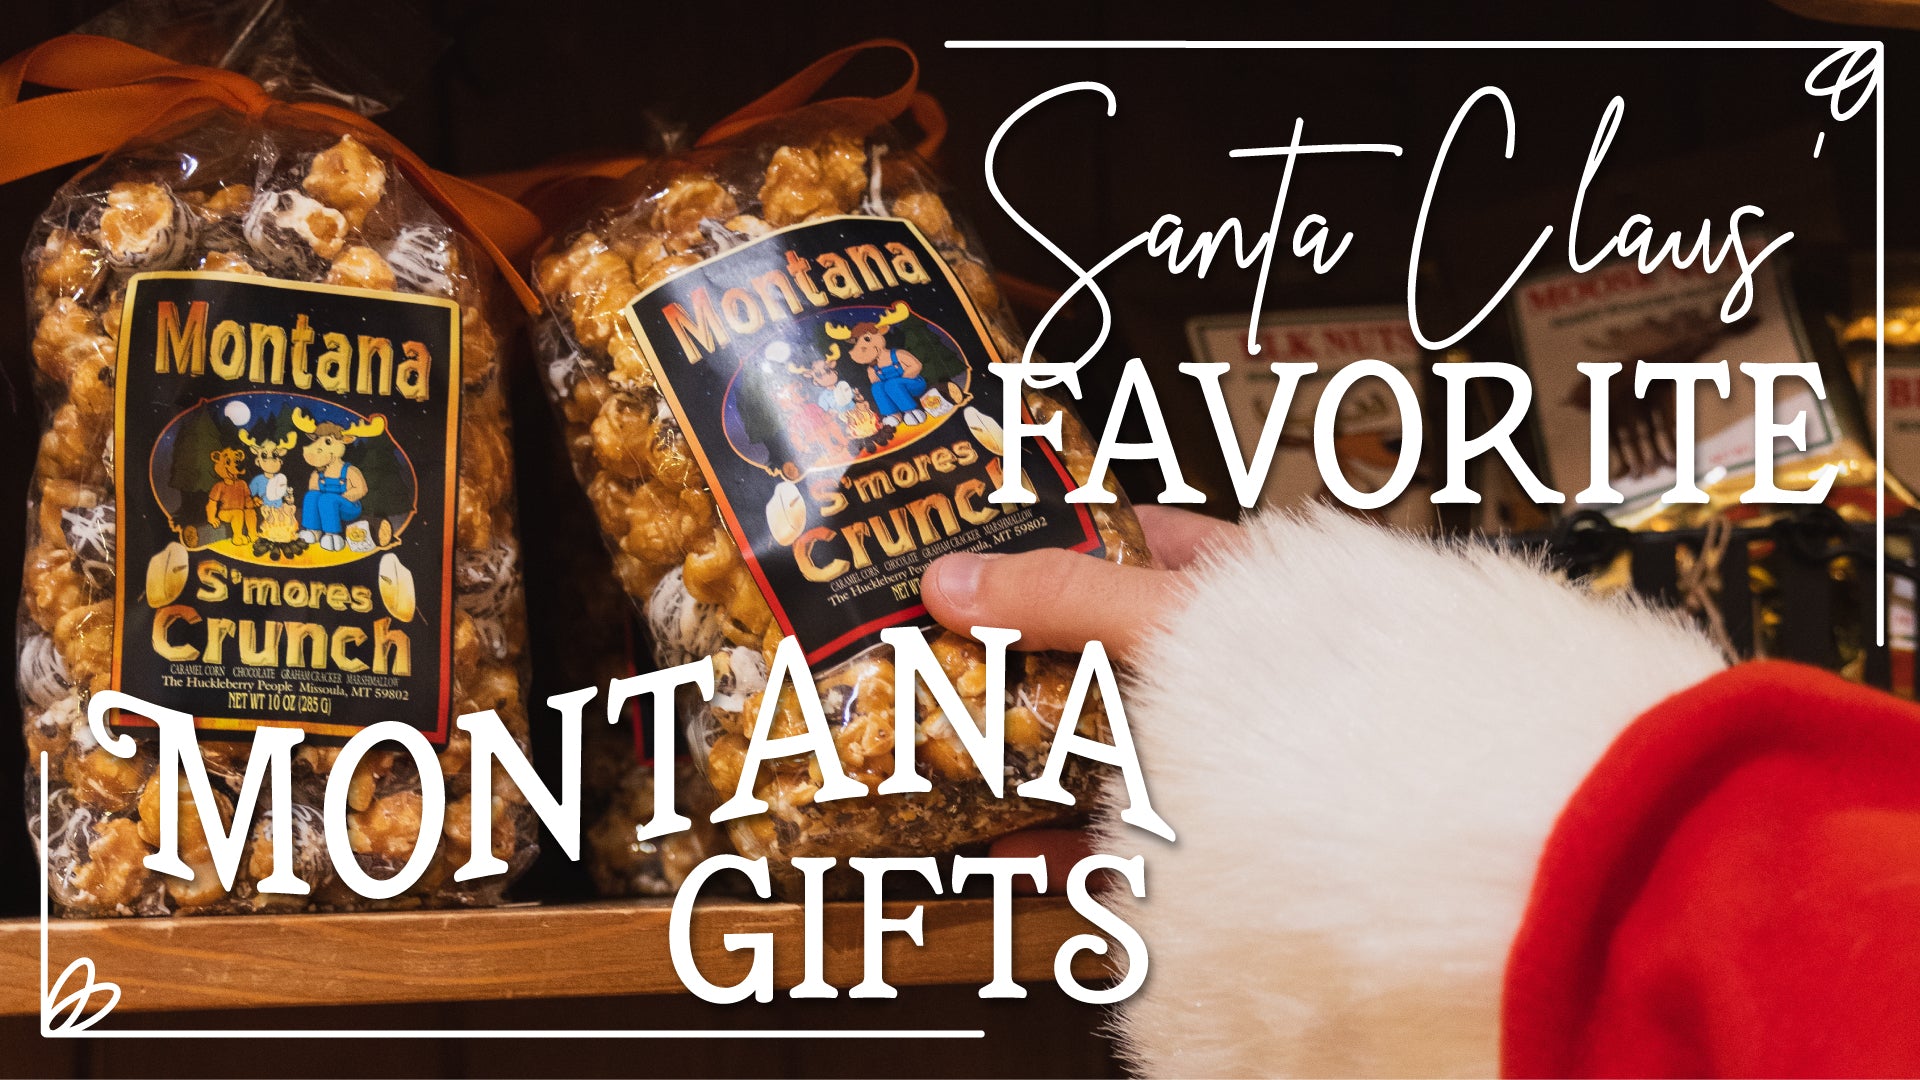 Santa's Favorite Montana Gifts to Give!